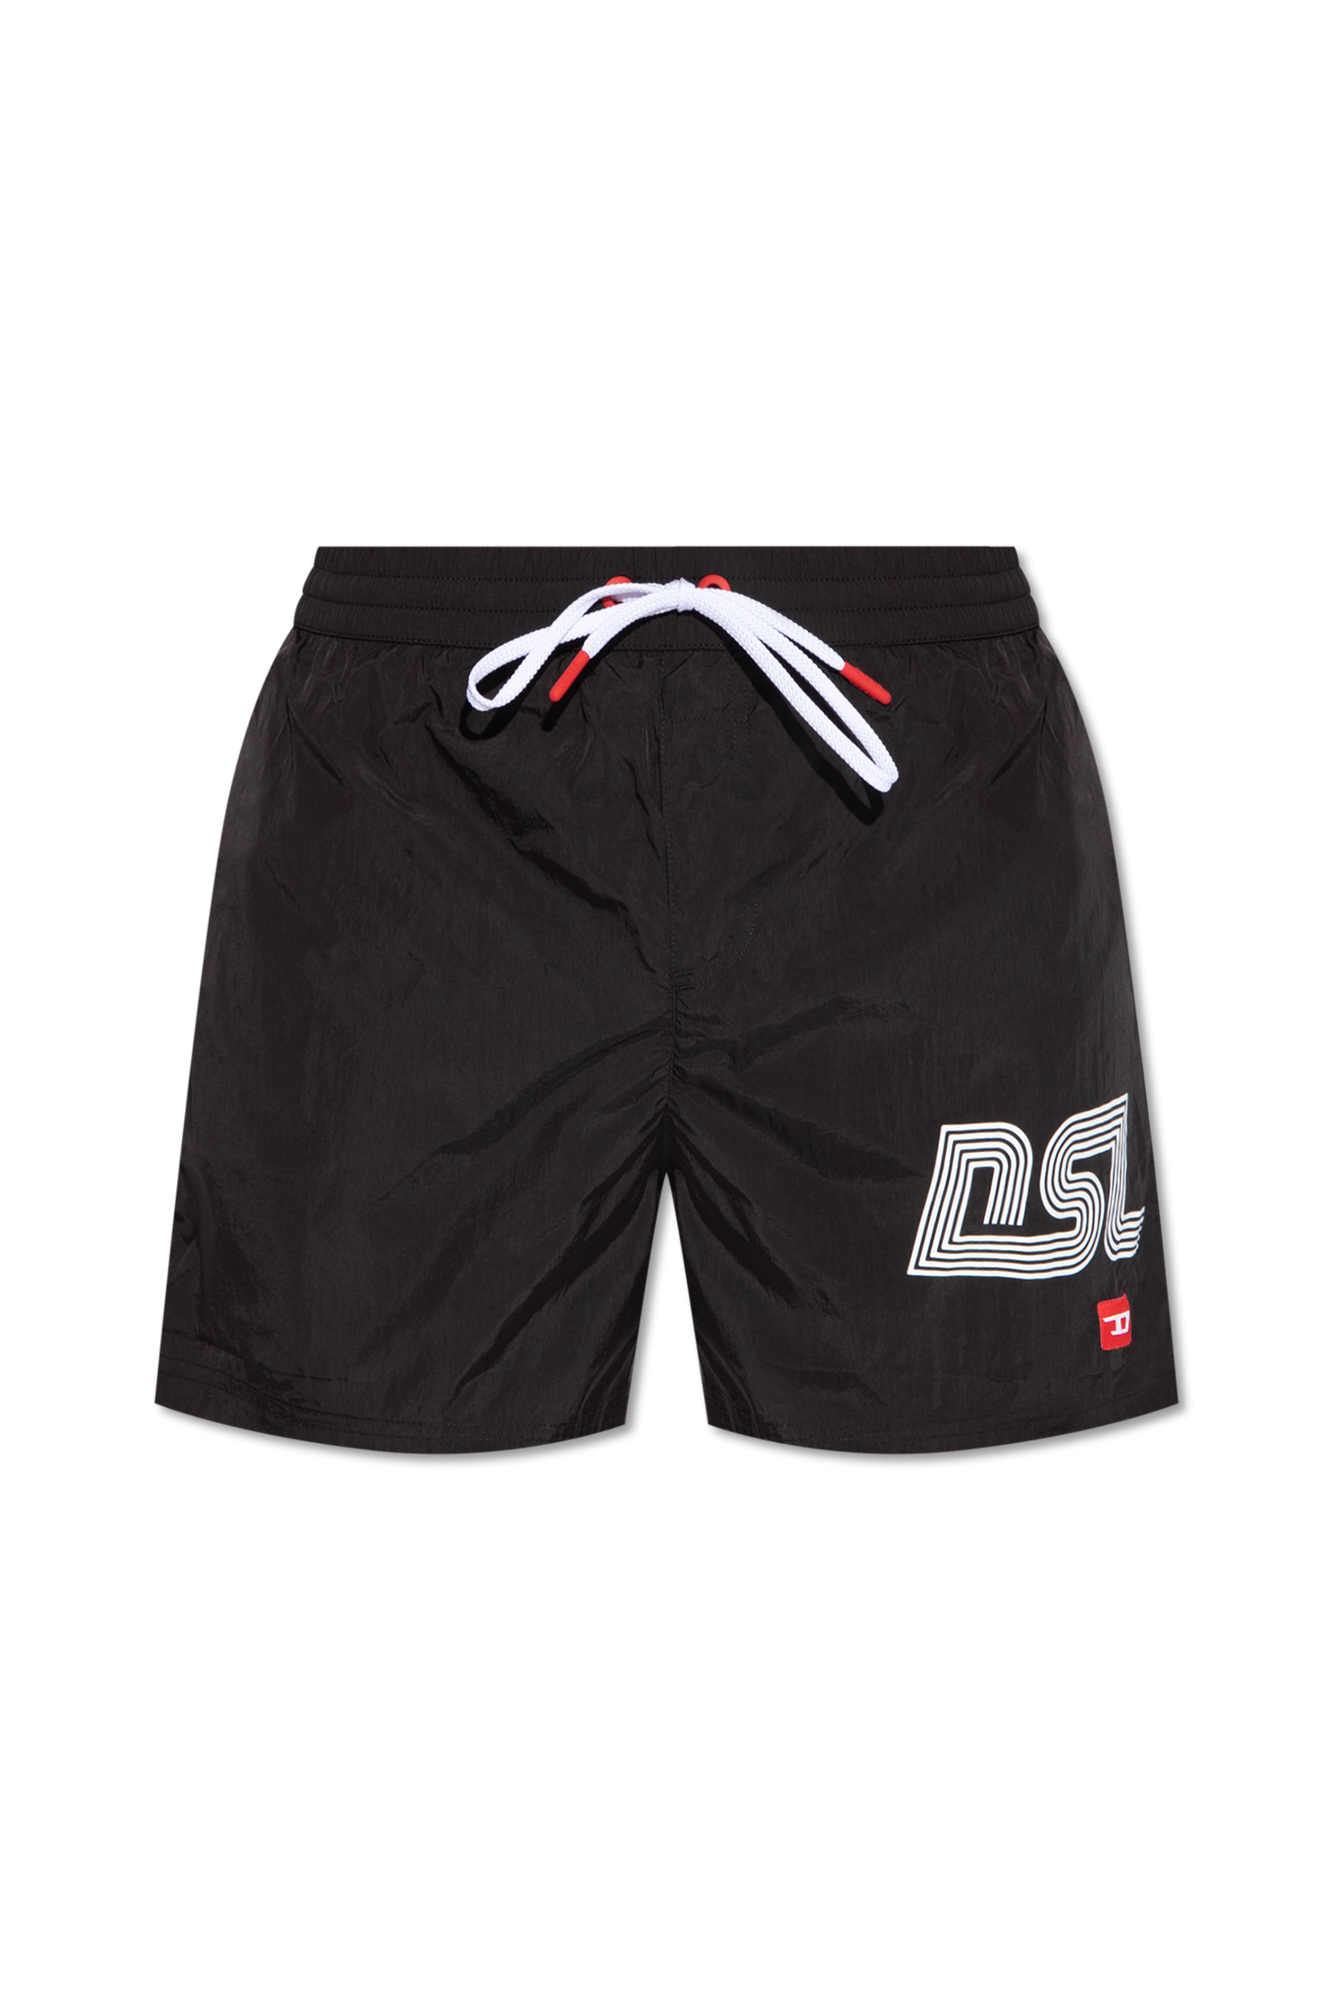 Black ‘BMBX-NICO’ swim shorts Diesel - Vitkac GB